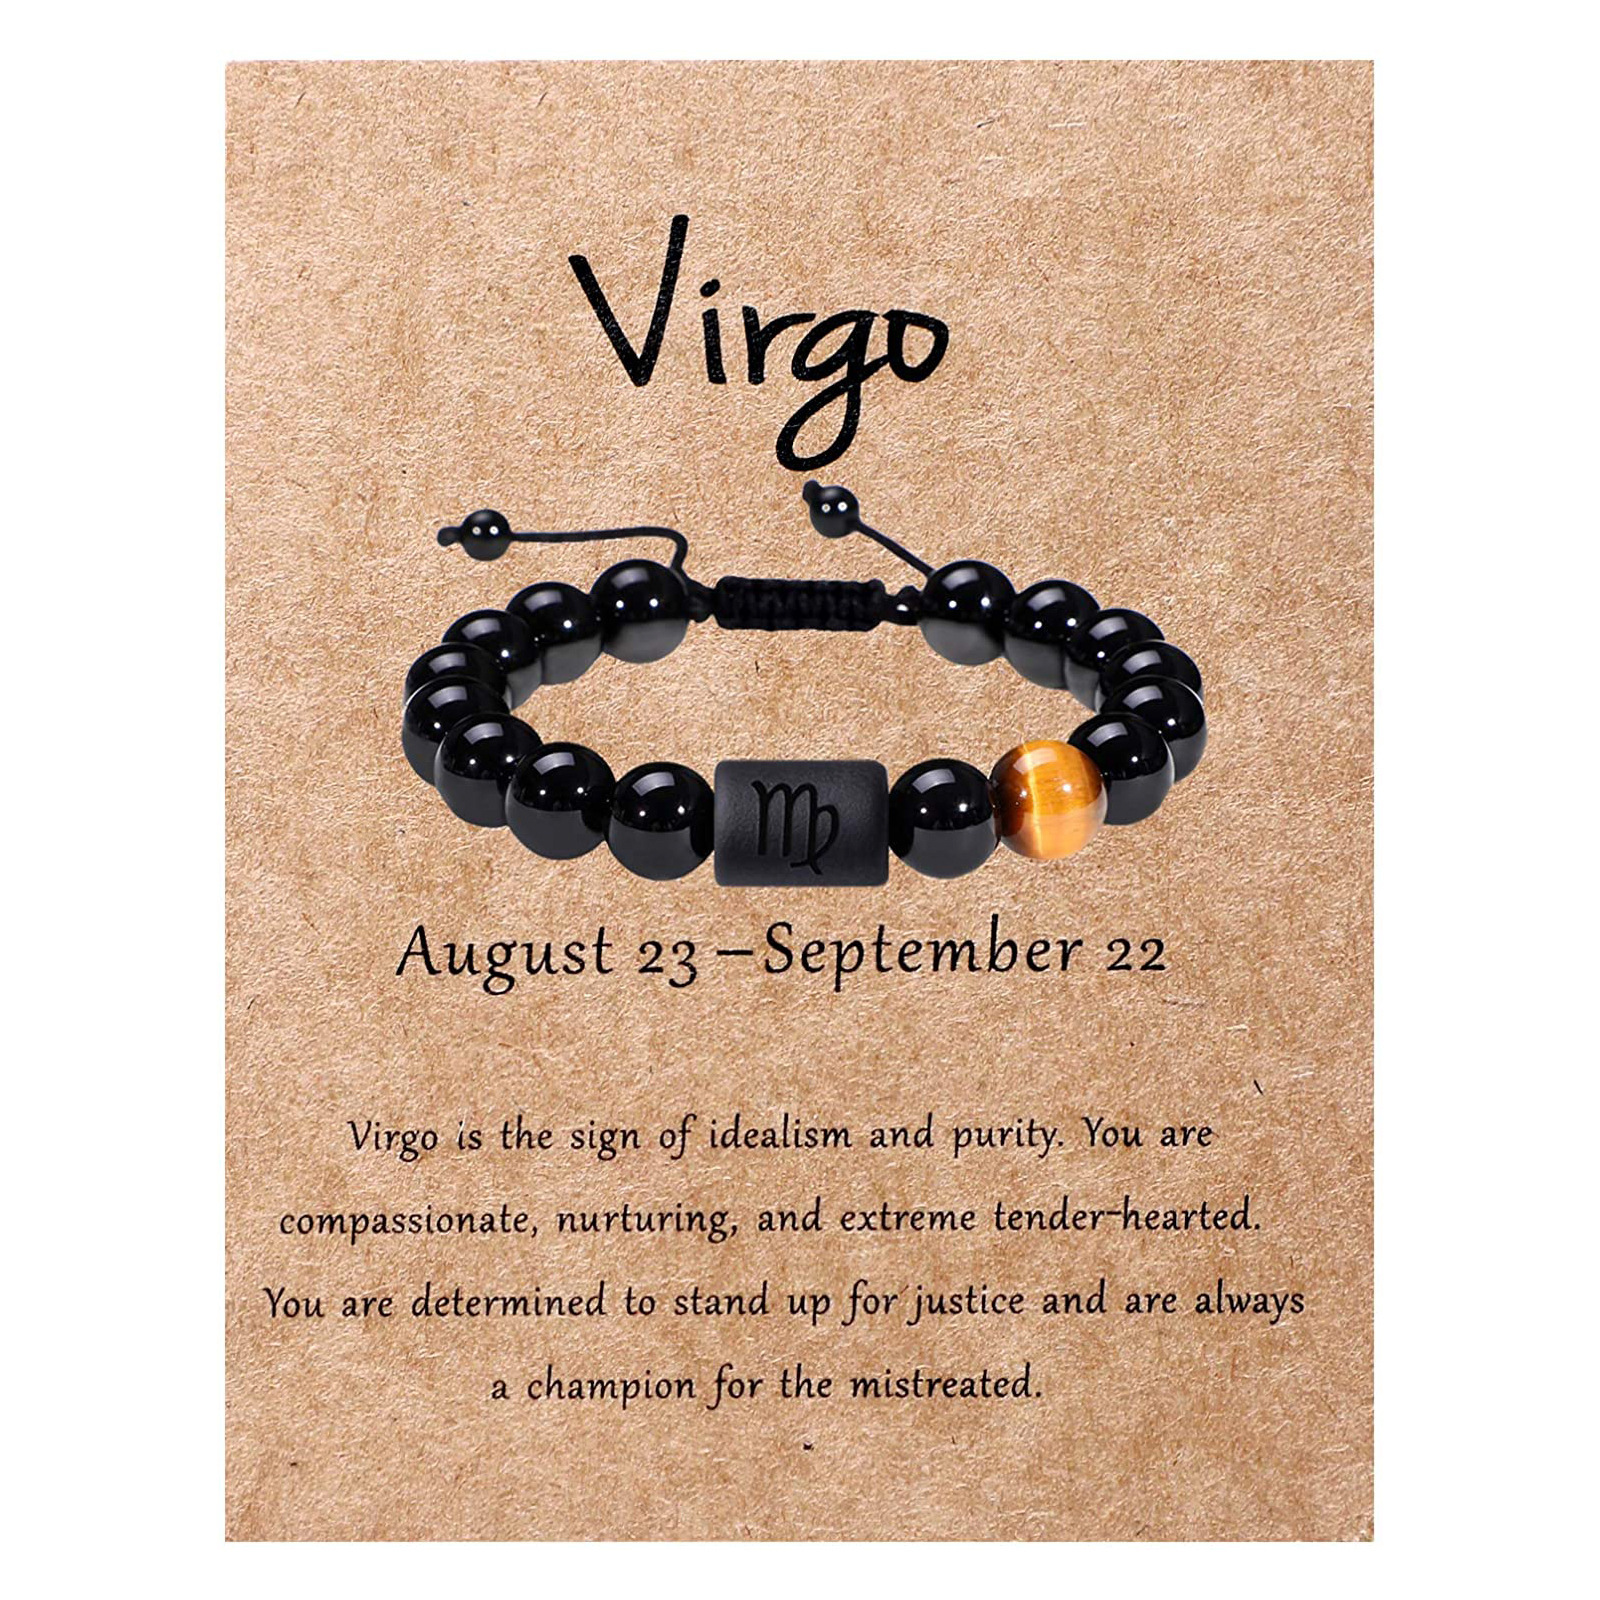 Virgo 8MM beads